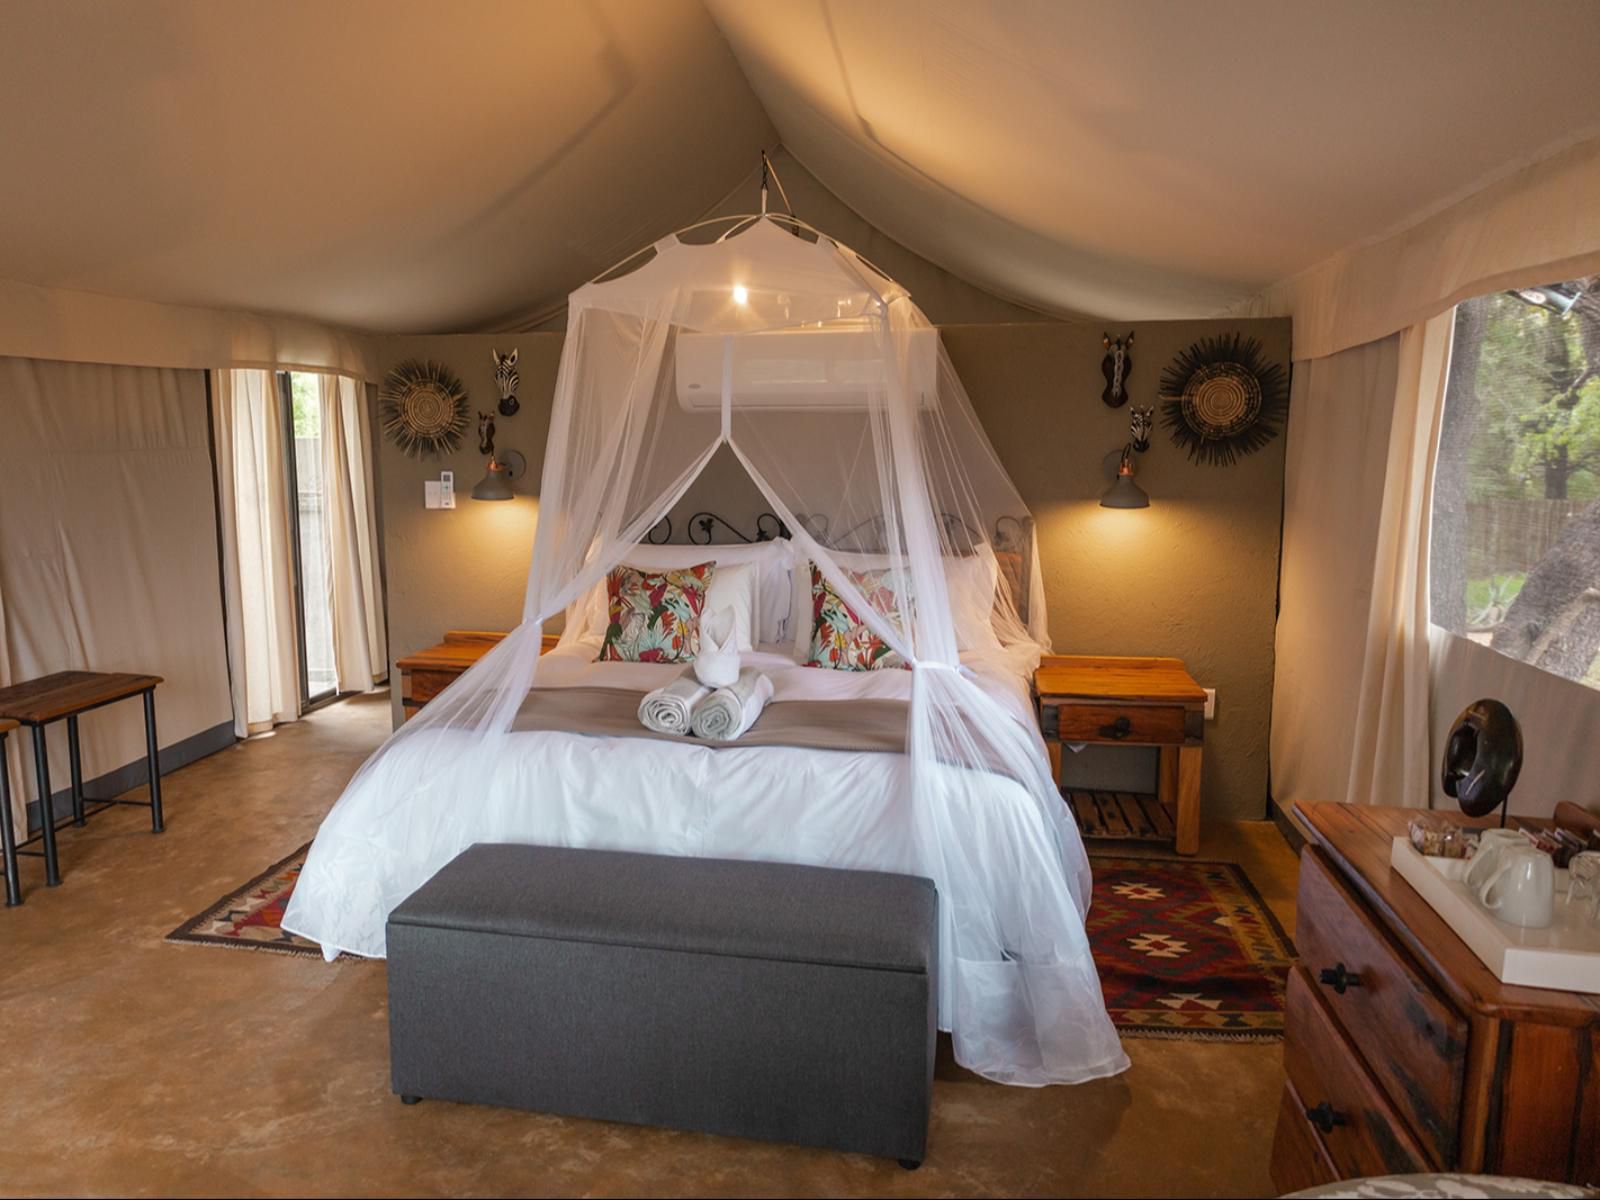 Umkumbe Bush Lodge Luxury Tented Camp Malamala Game Reserve Mpumalanga South Africa Tent, Architecture, Bedroom